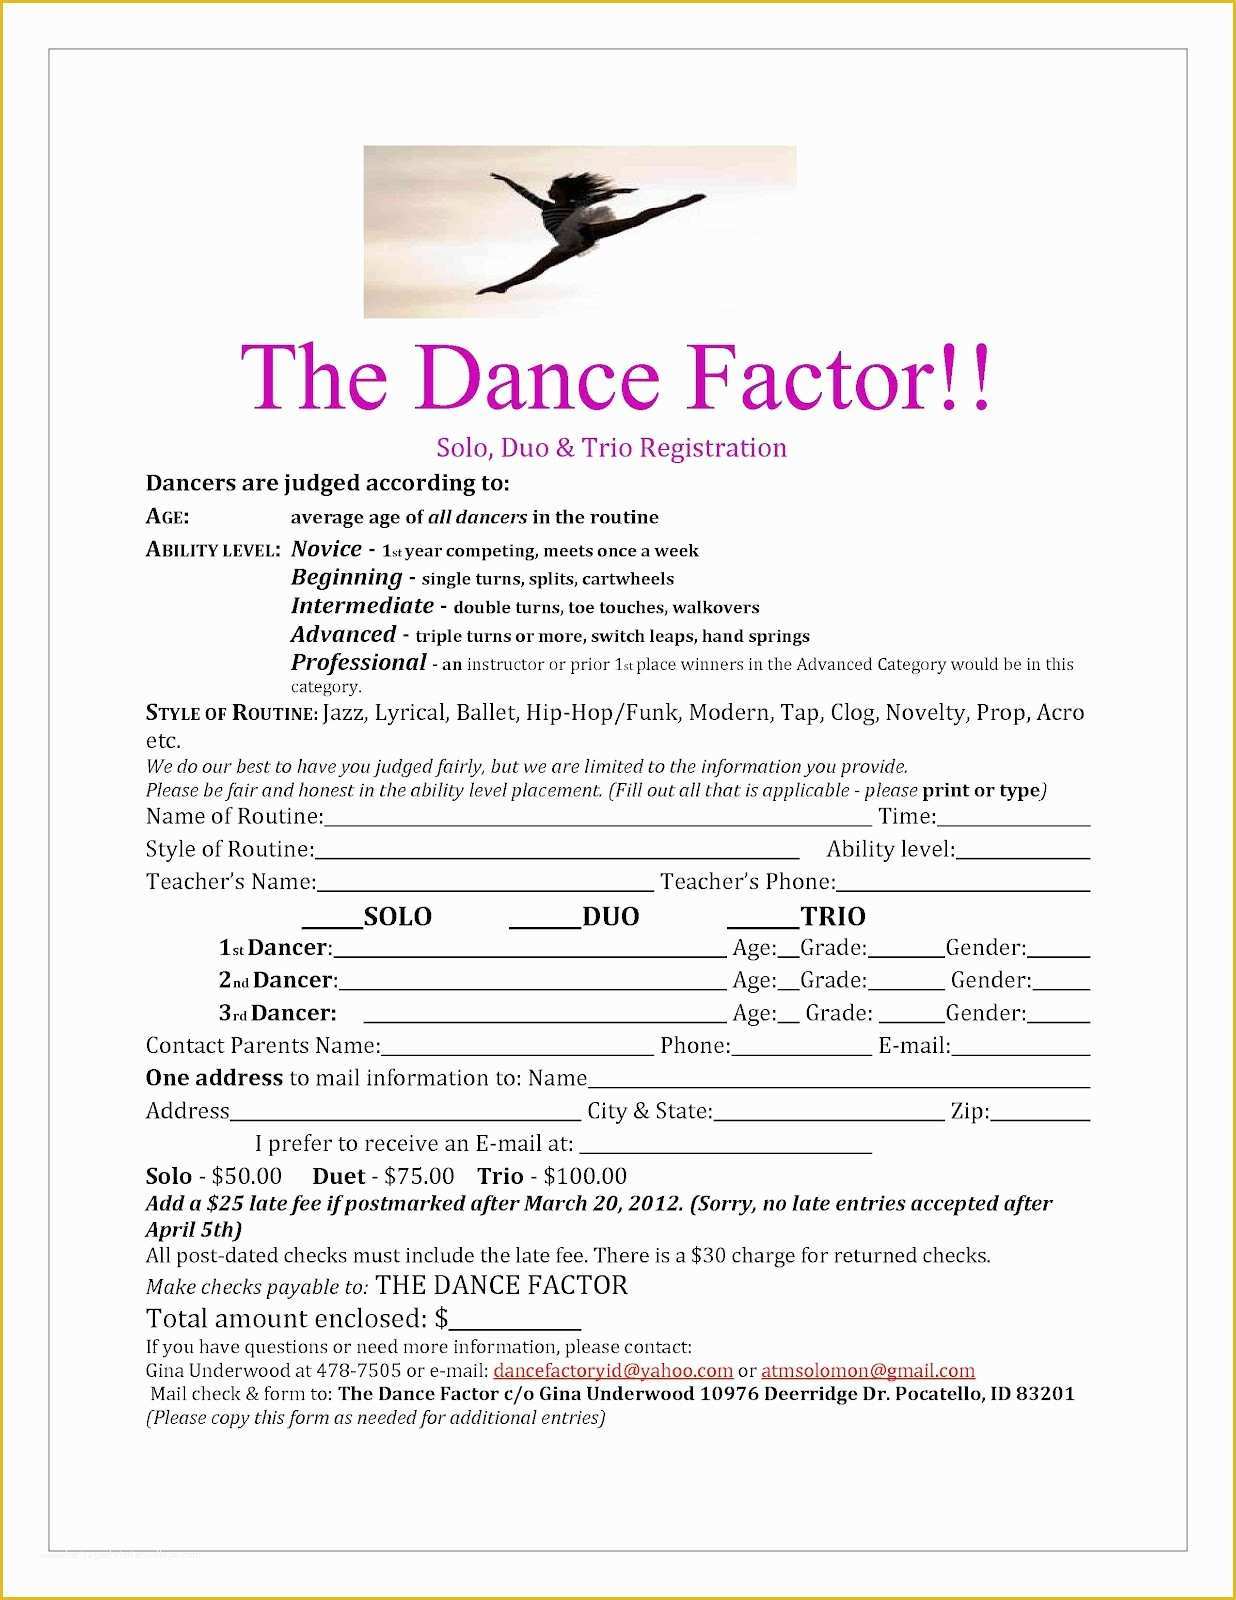 Dance Registration form Template Free Of Eagle Rock Dance Dance Factor solo Registration form